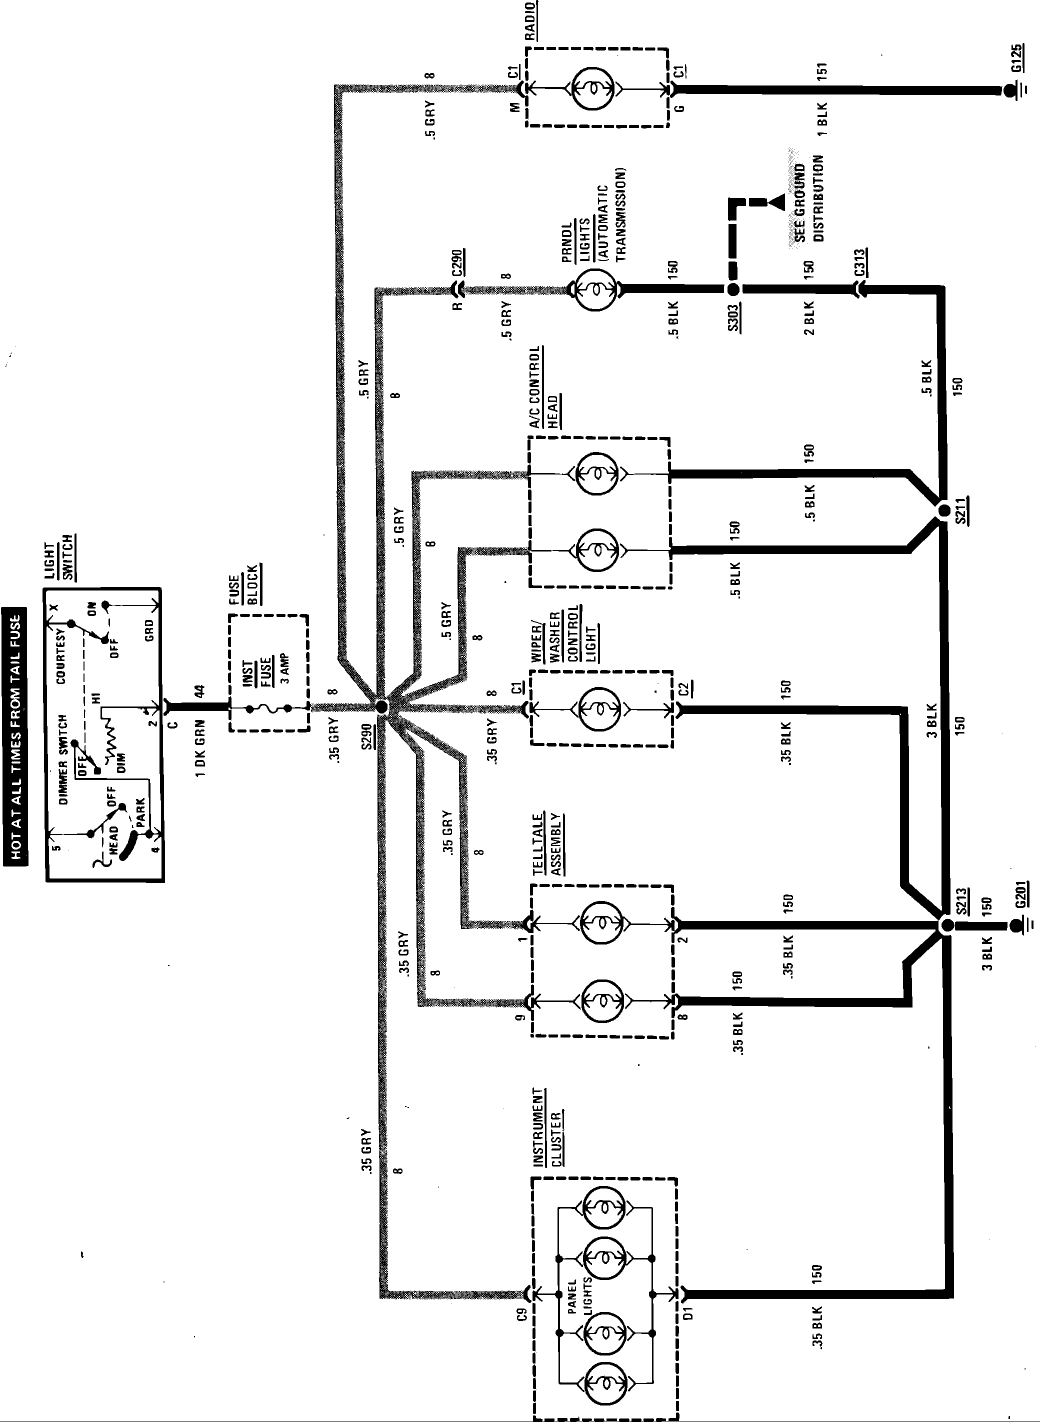 1985 Chevy Scottsdale Wiring Diagram